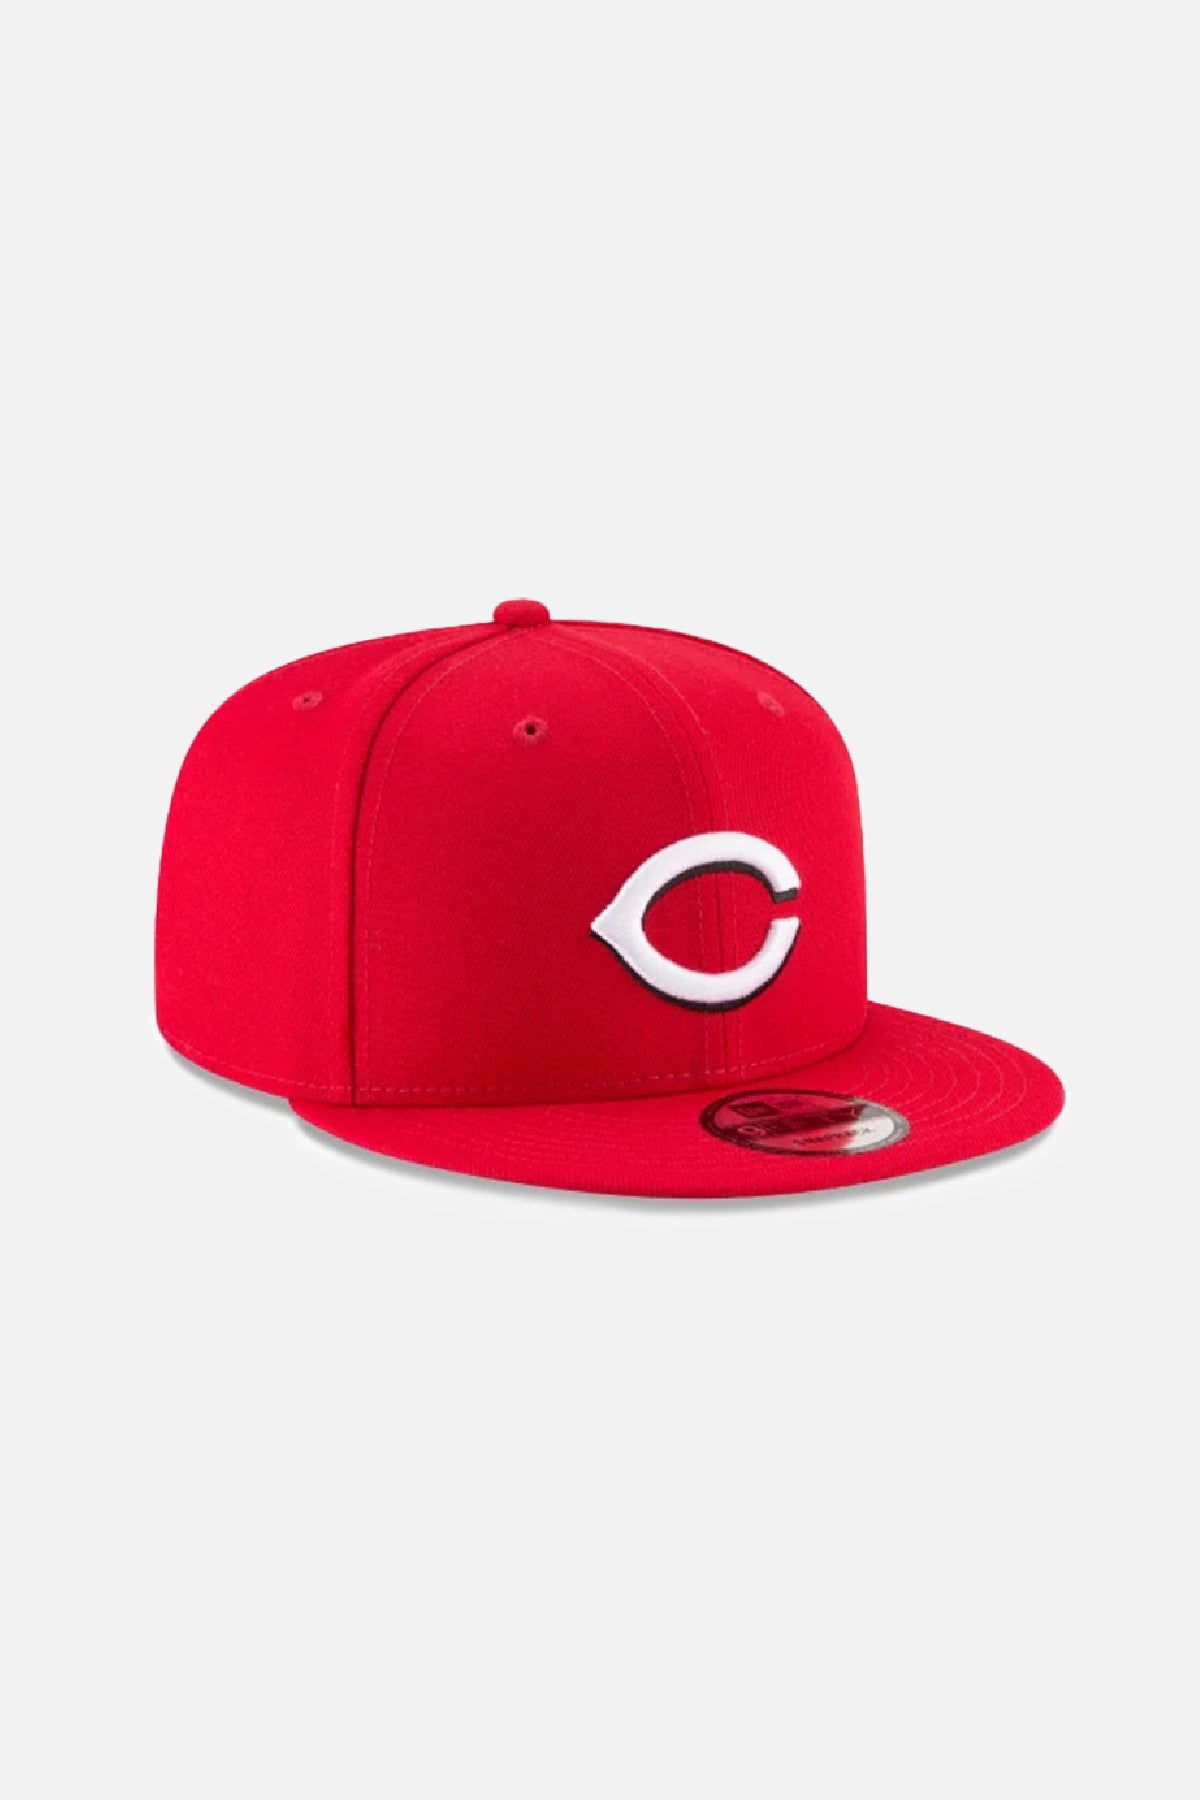 New Era Cincinnati Reds Team Color 9fifty Snapback